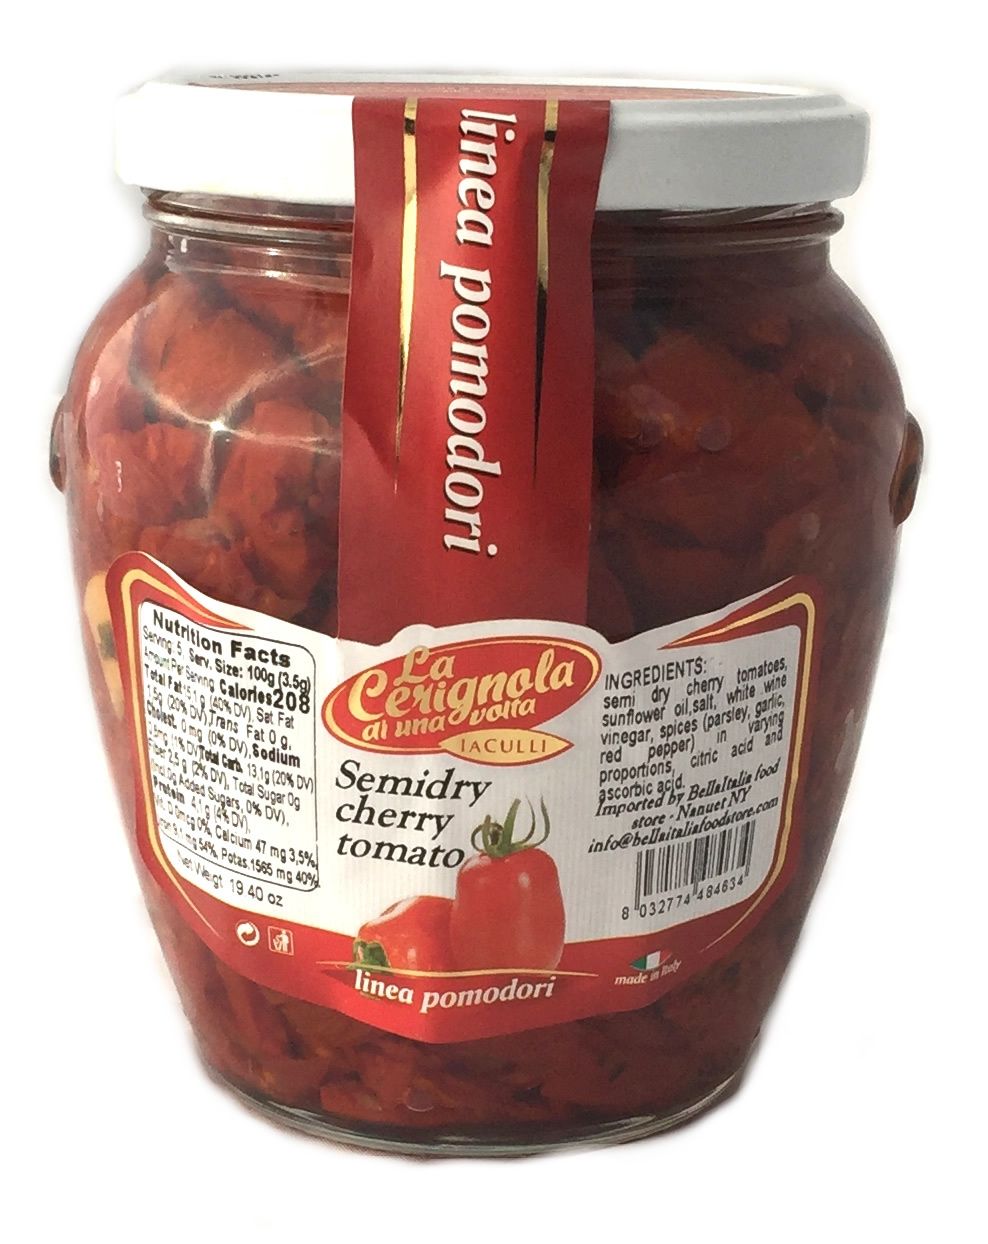 La Cerignola Semi-Dry Cherry Tomatoes